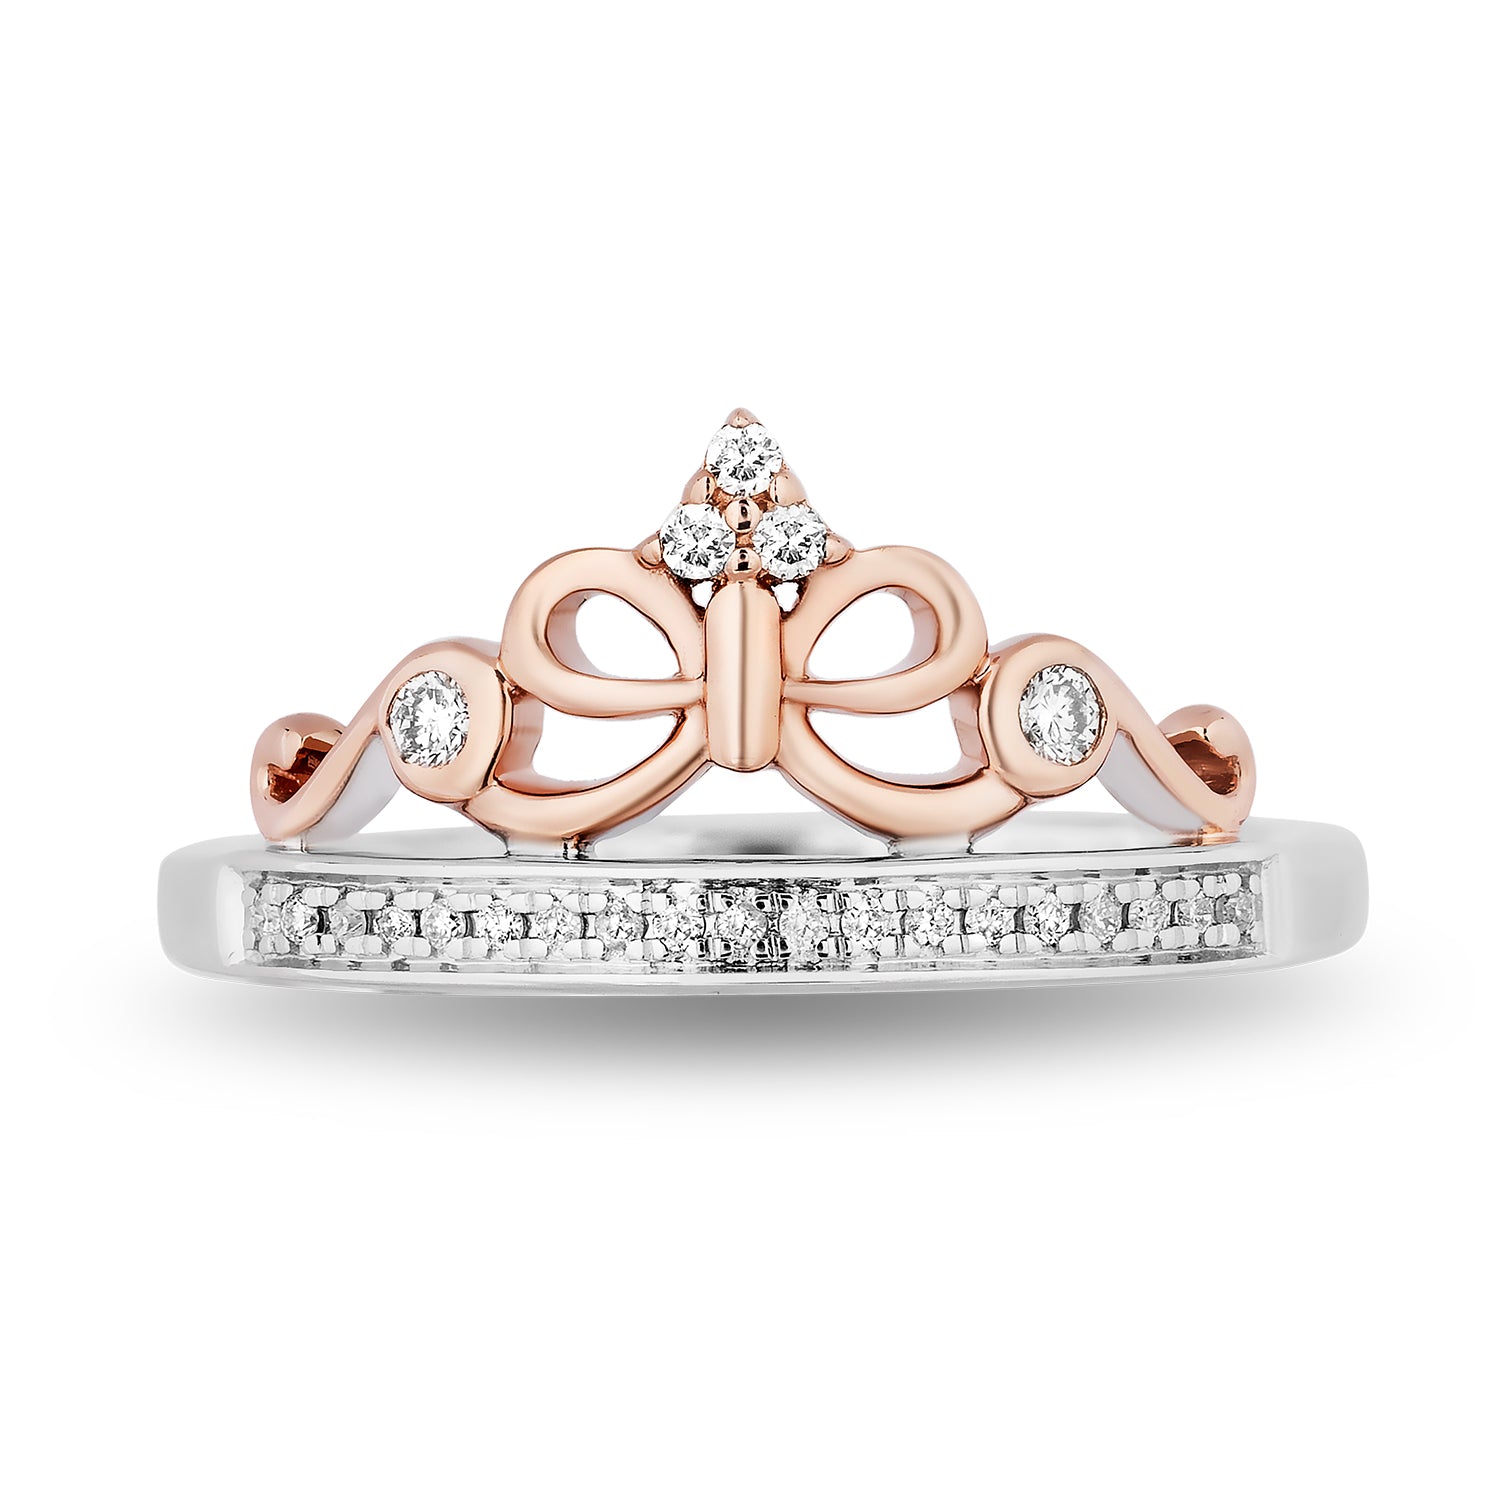 Disney Ariel Inspired Diamond Tiara Ring 14K Rose Gold over Sterling Silver  1/10 CTTW